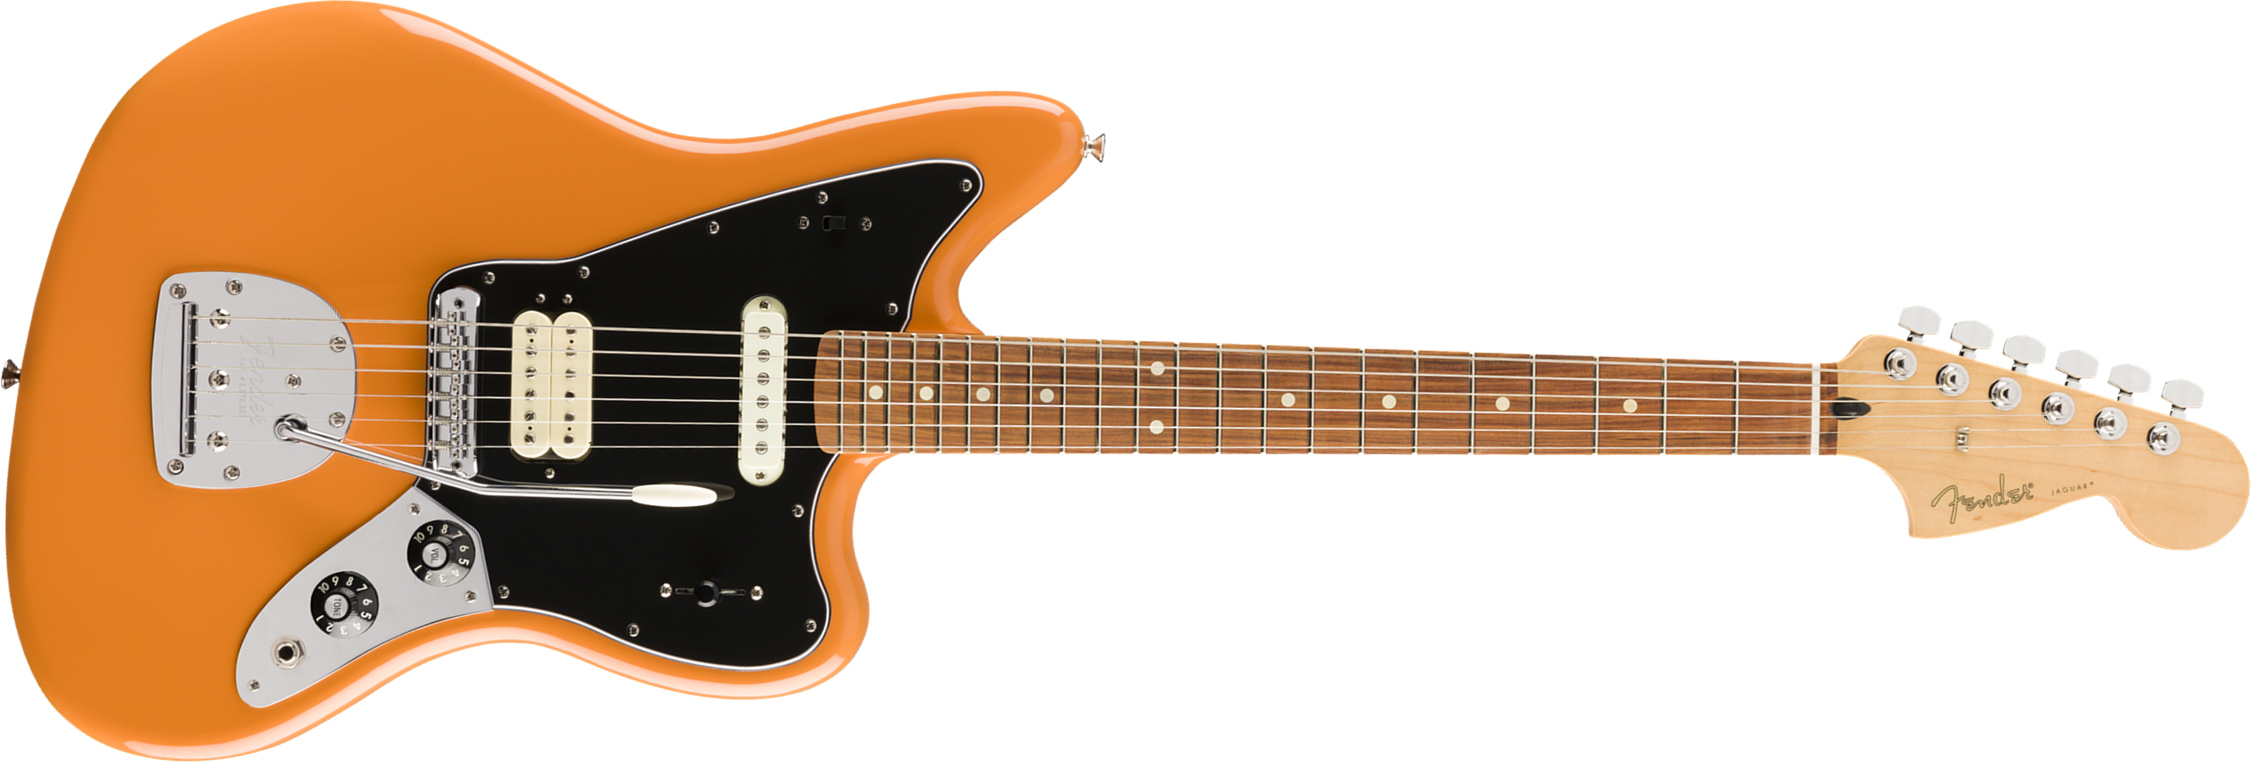 Fender Jaguar Player Mex Hs Pf - Capri Orange - Guitarra electrica retro rock - Main picture